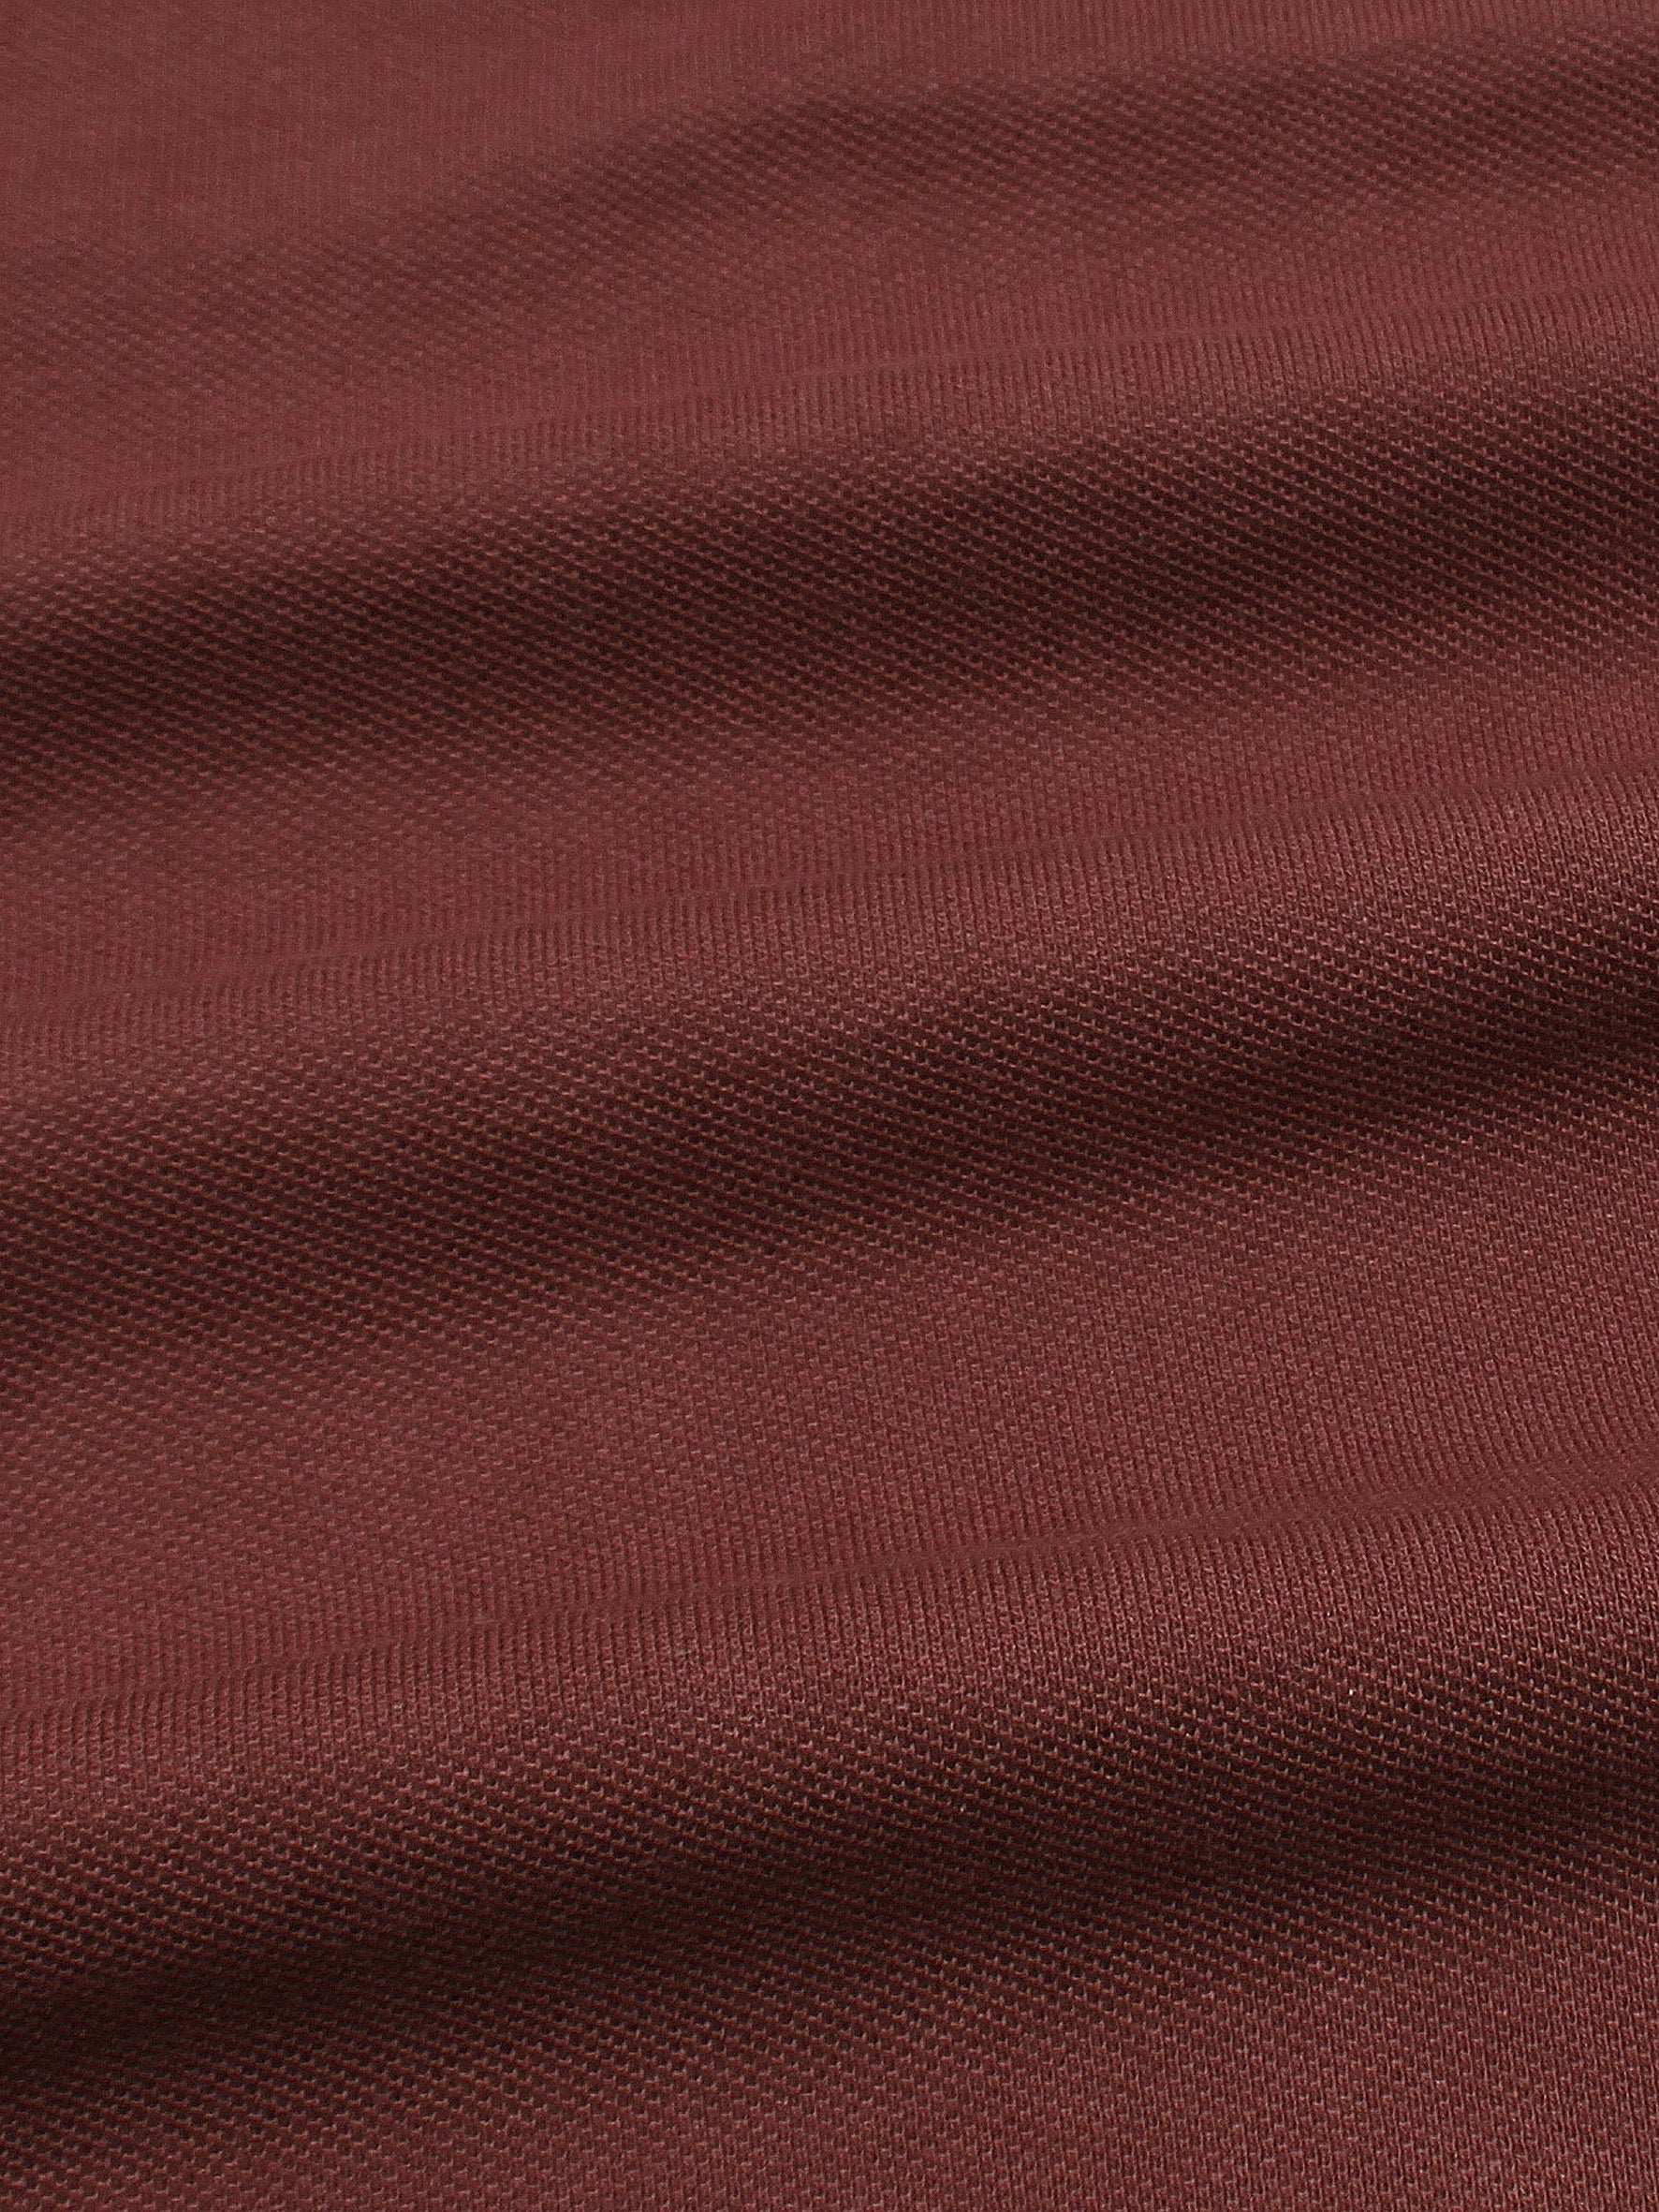 USPLO Imported maroon polo shirt(00319)